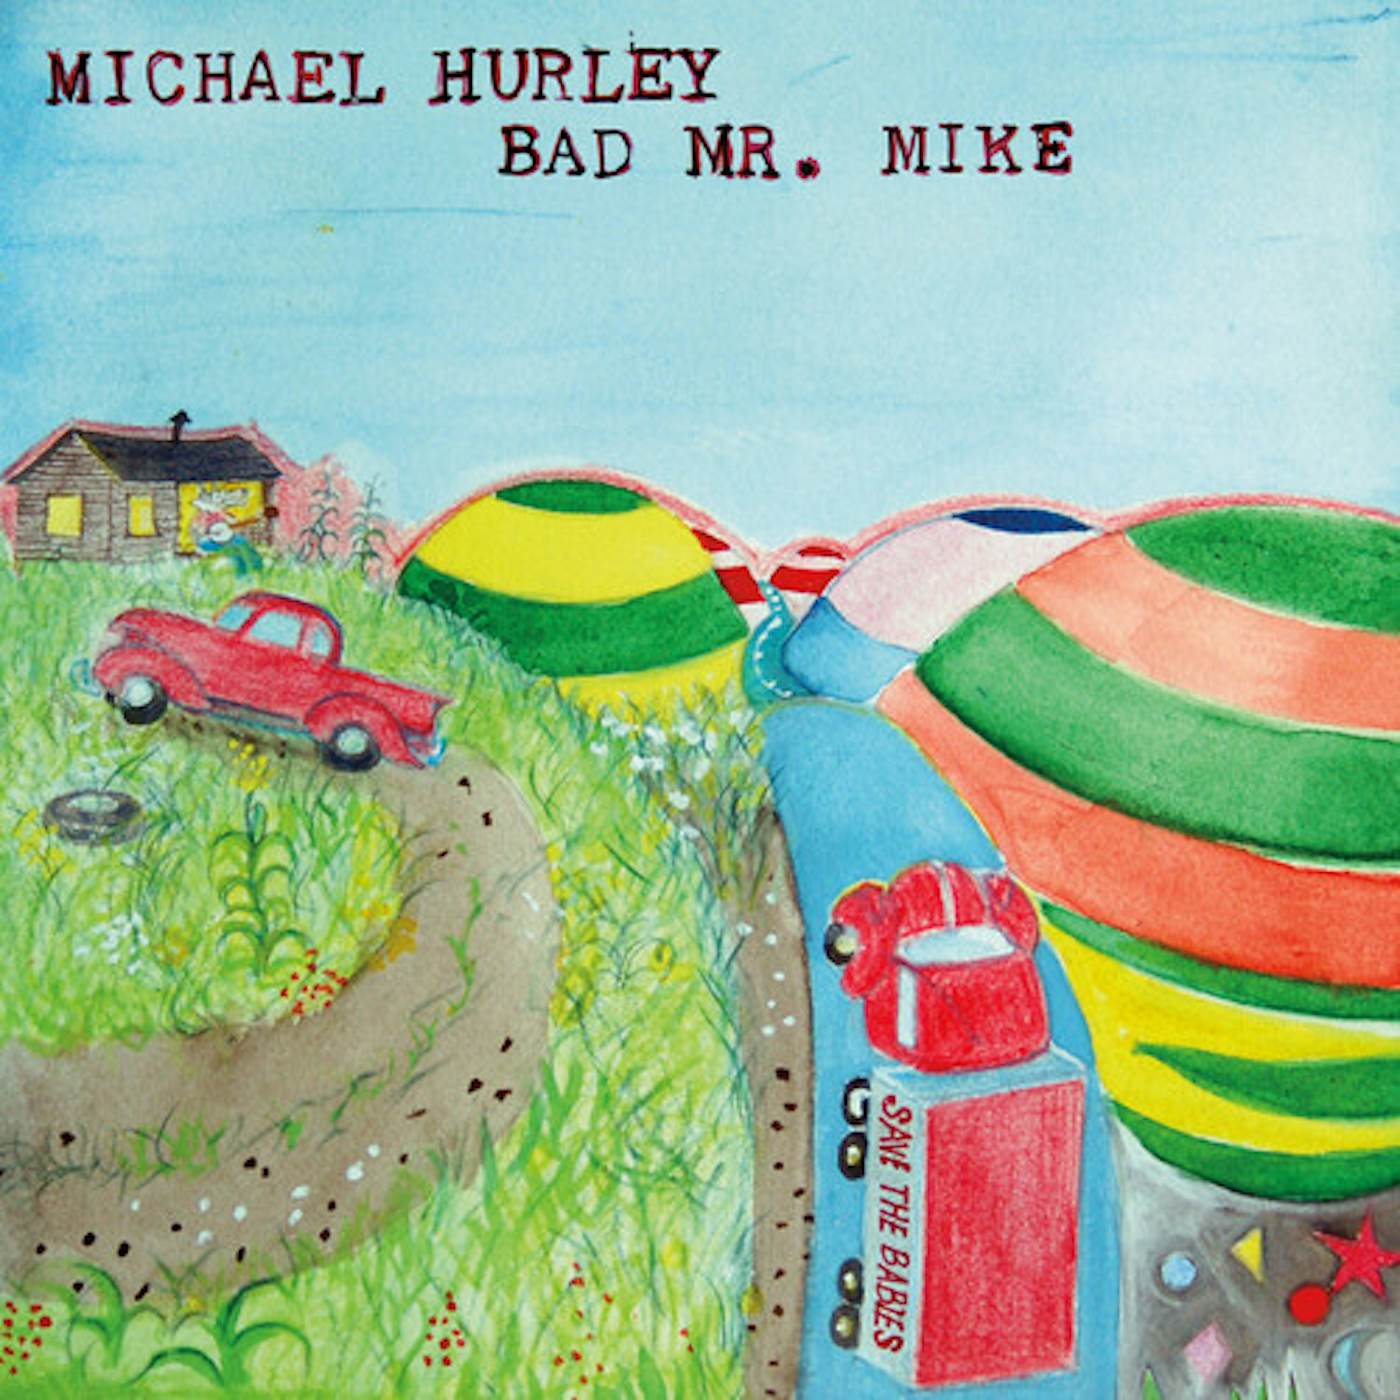 Michael Hurley BAD MR. MIKE Vinyl Record